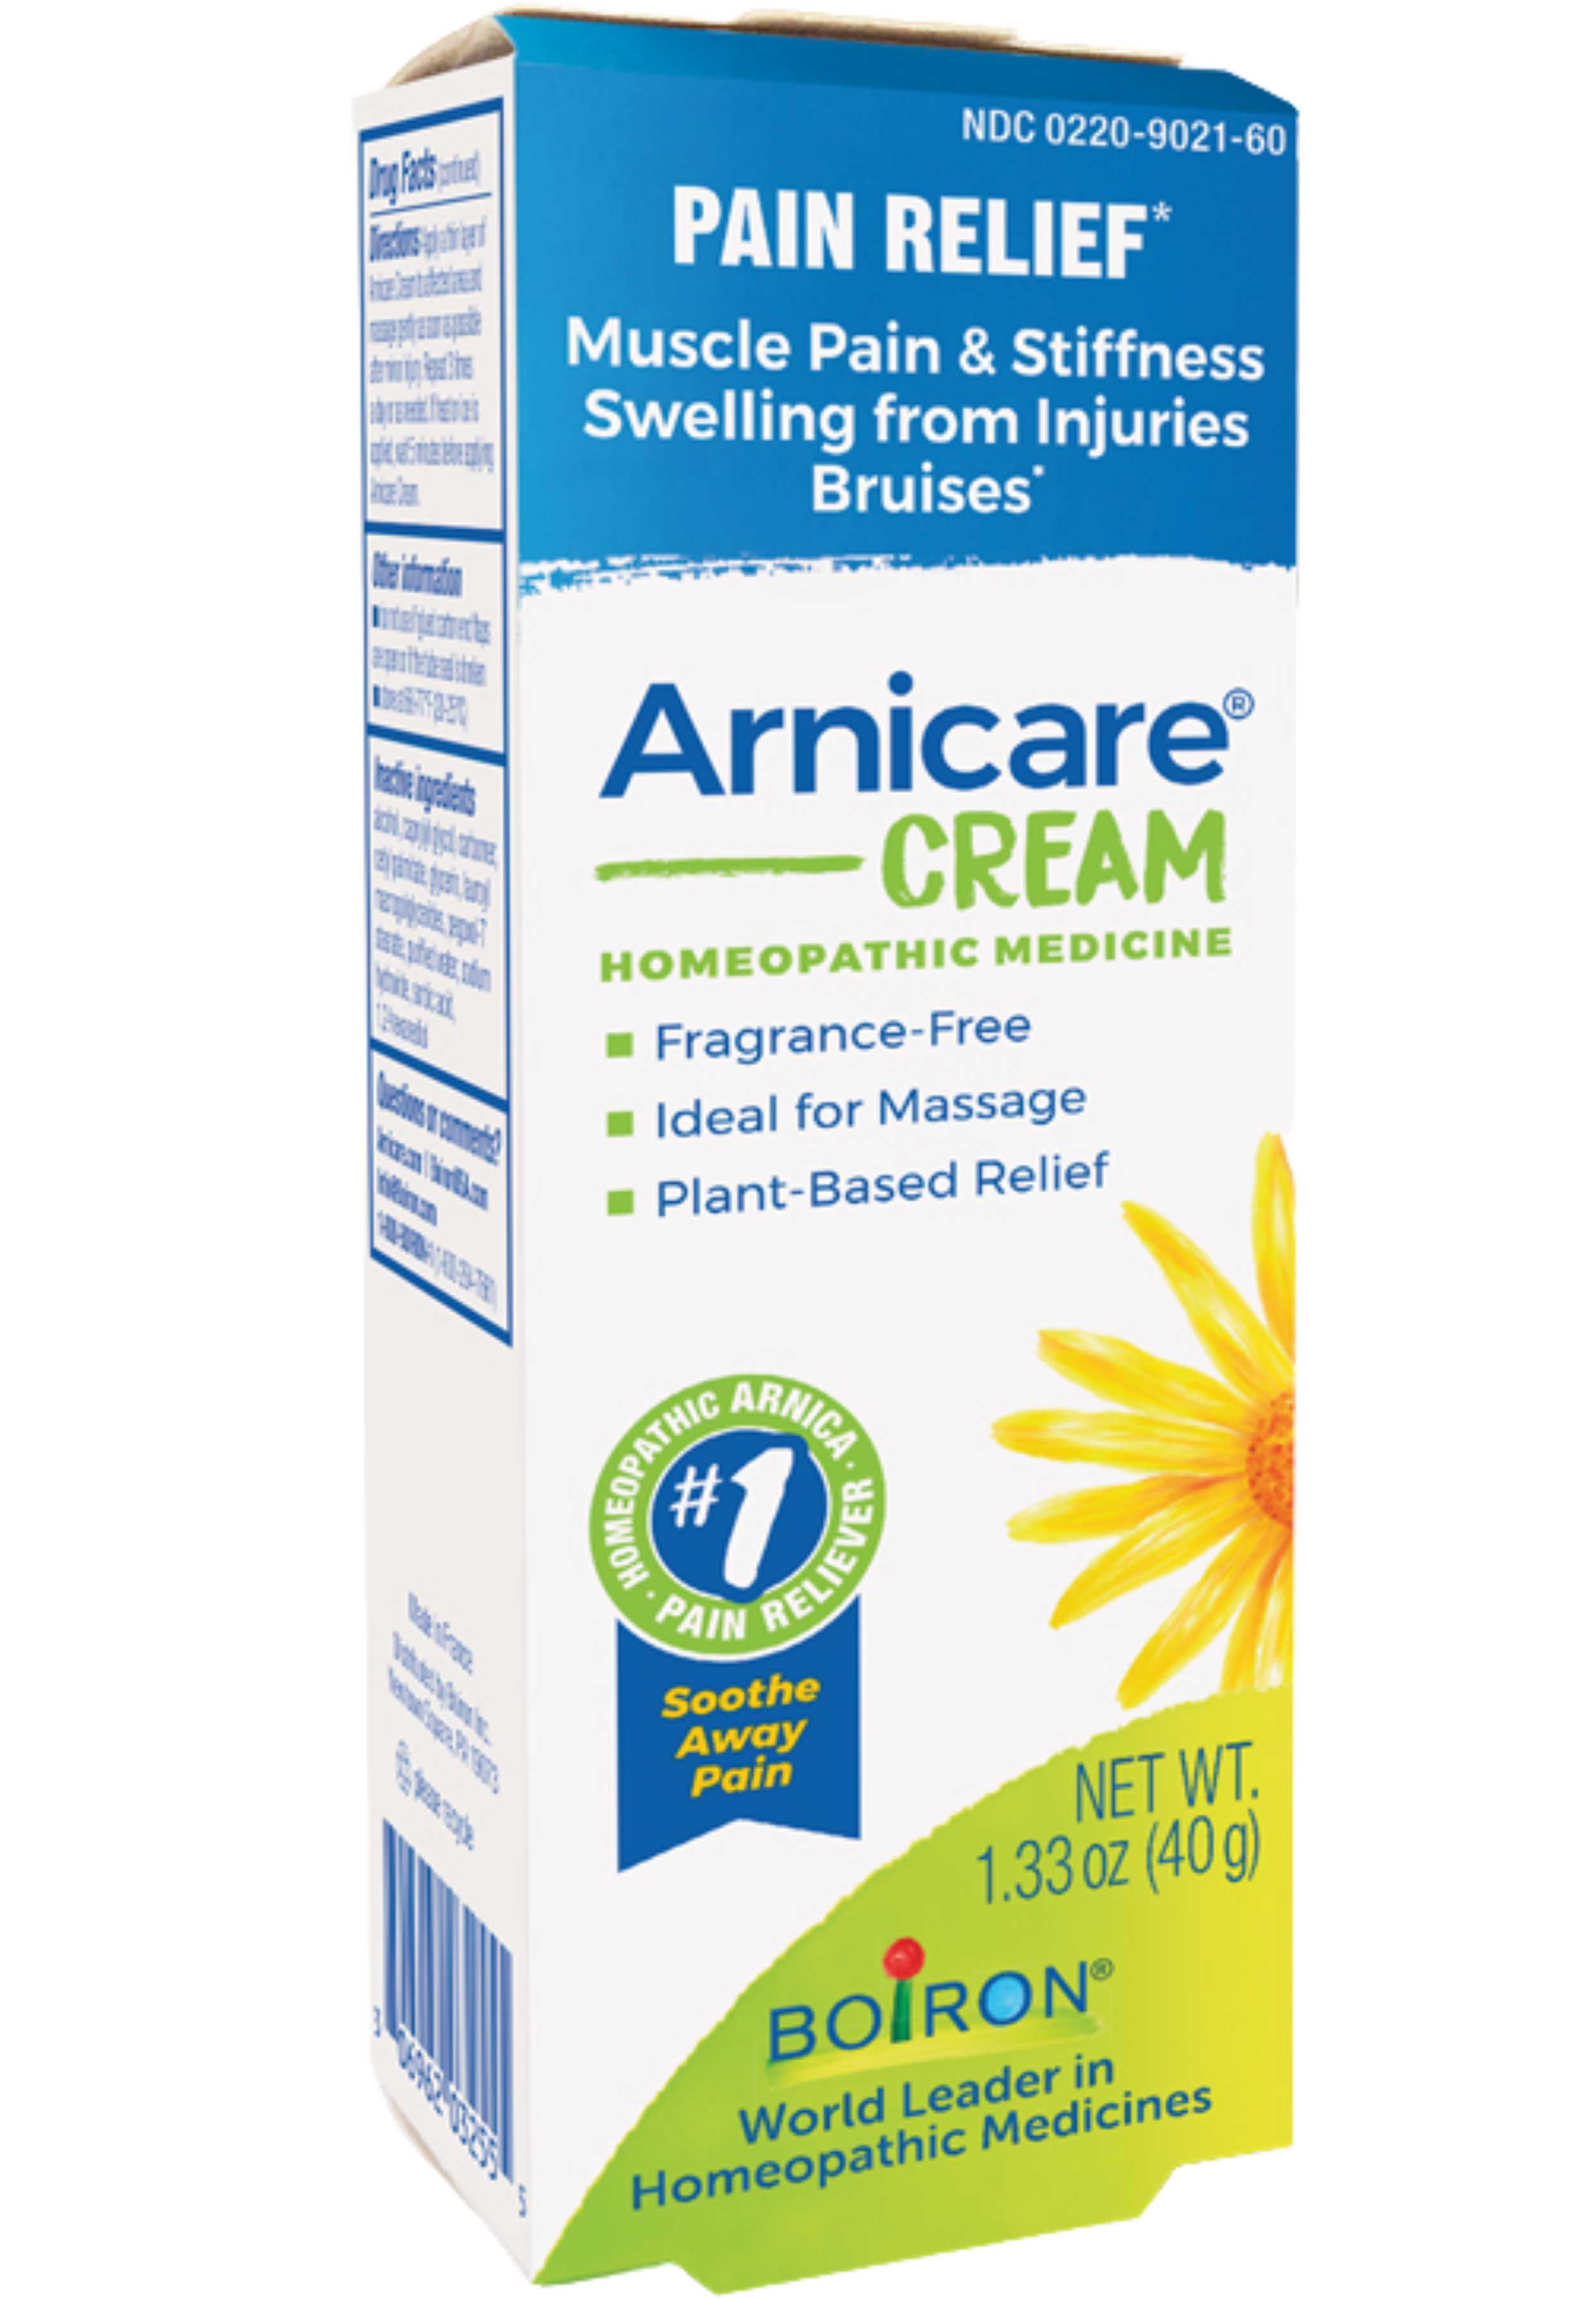 Boiron Homeopathics Arnicare Cream